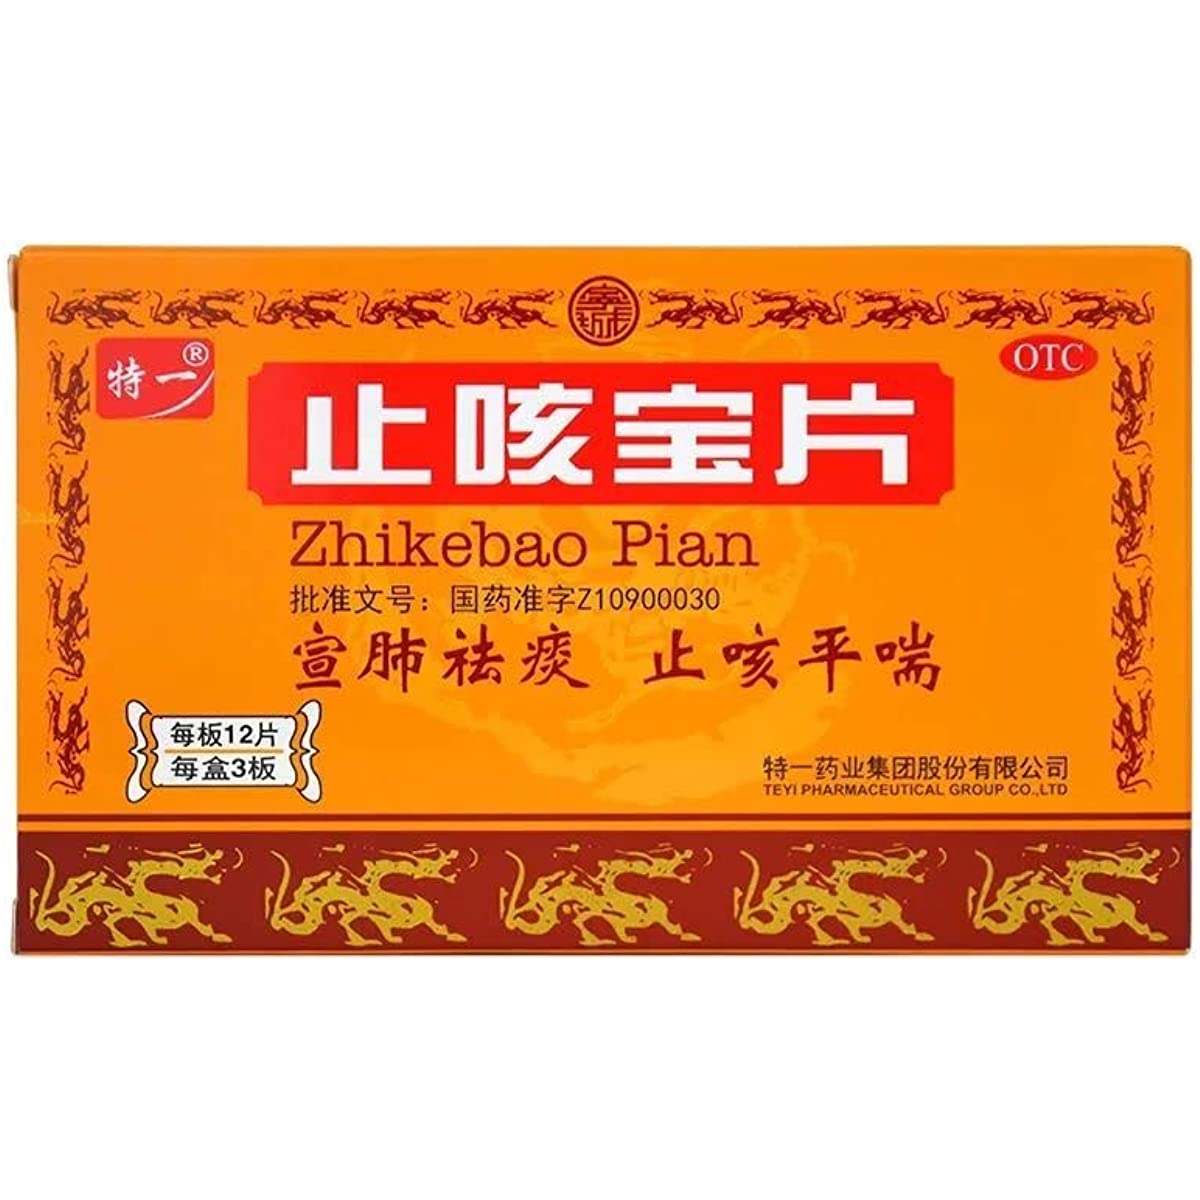 1 Box, Zhi kbao Pian 36 Tablets/ Box 止咳宝片